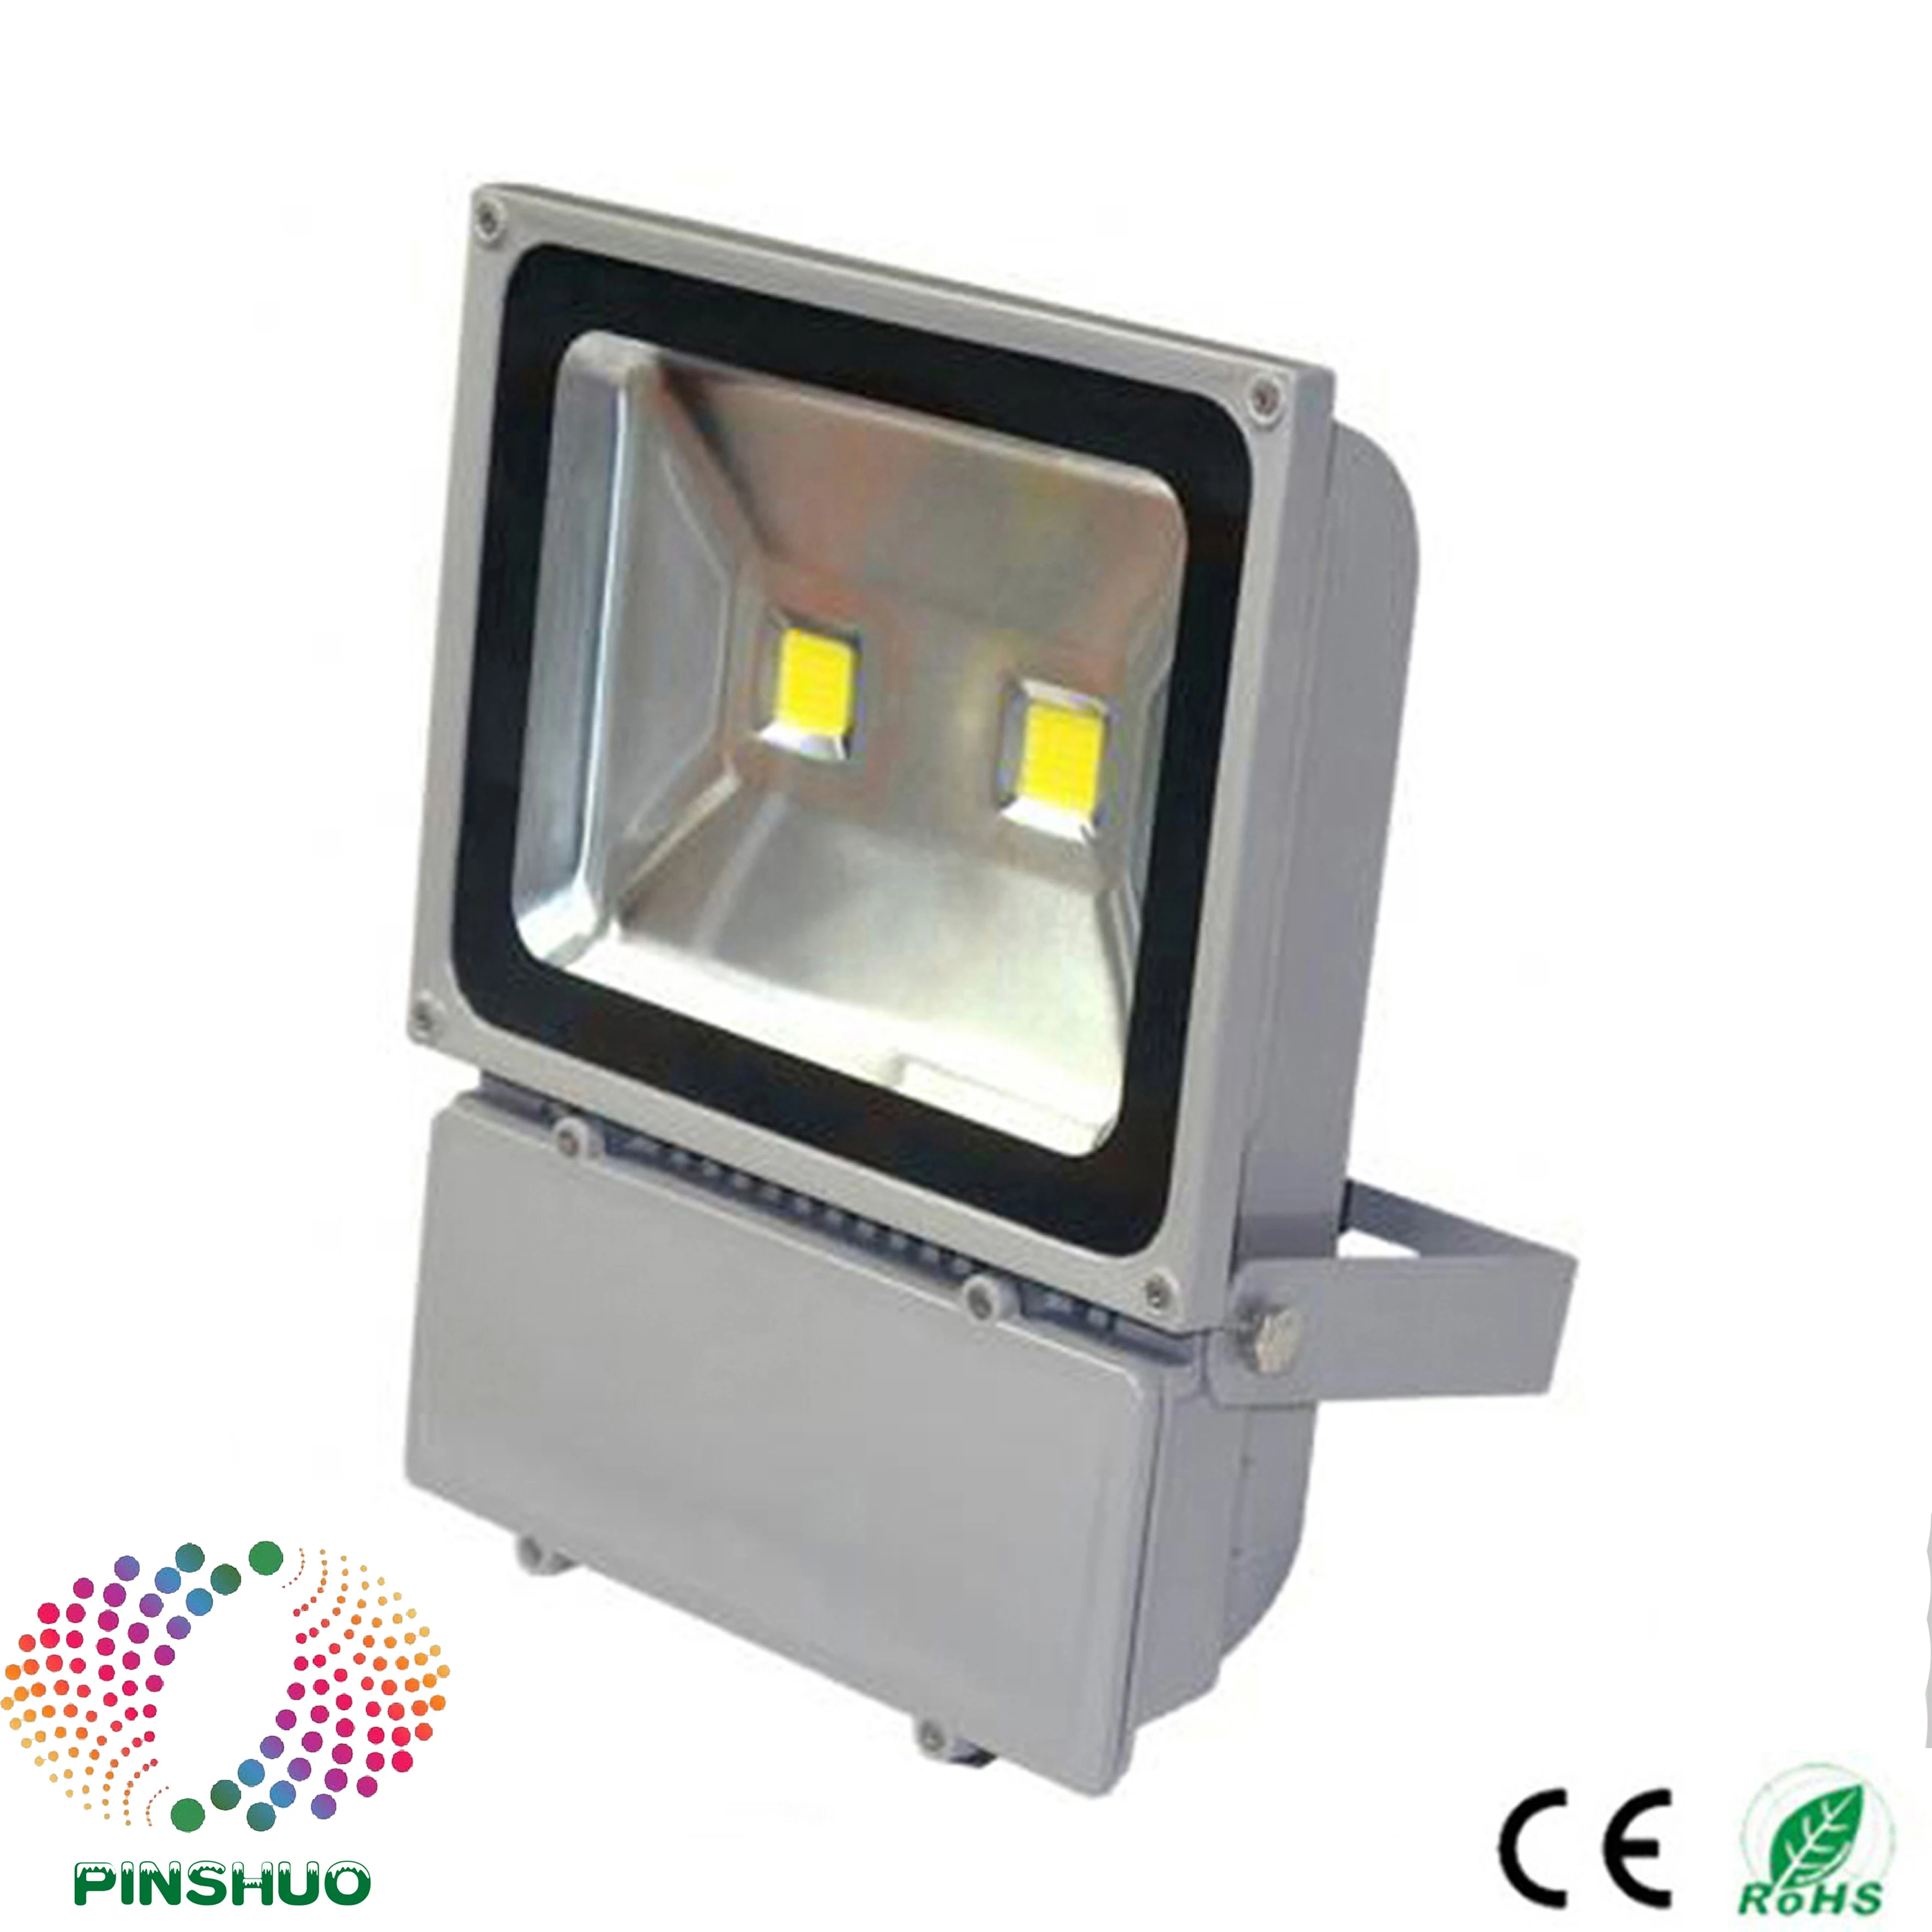 

10PCS 100W LED Flood Light Floodlight Spotlight Bulb UV Bridgelux Chip 3 Years Warranty IP65 Waterproof Super Bright 100-110LM/W